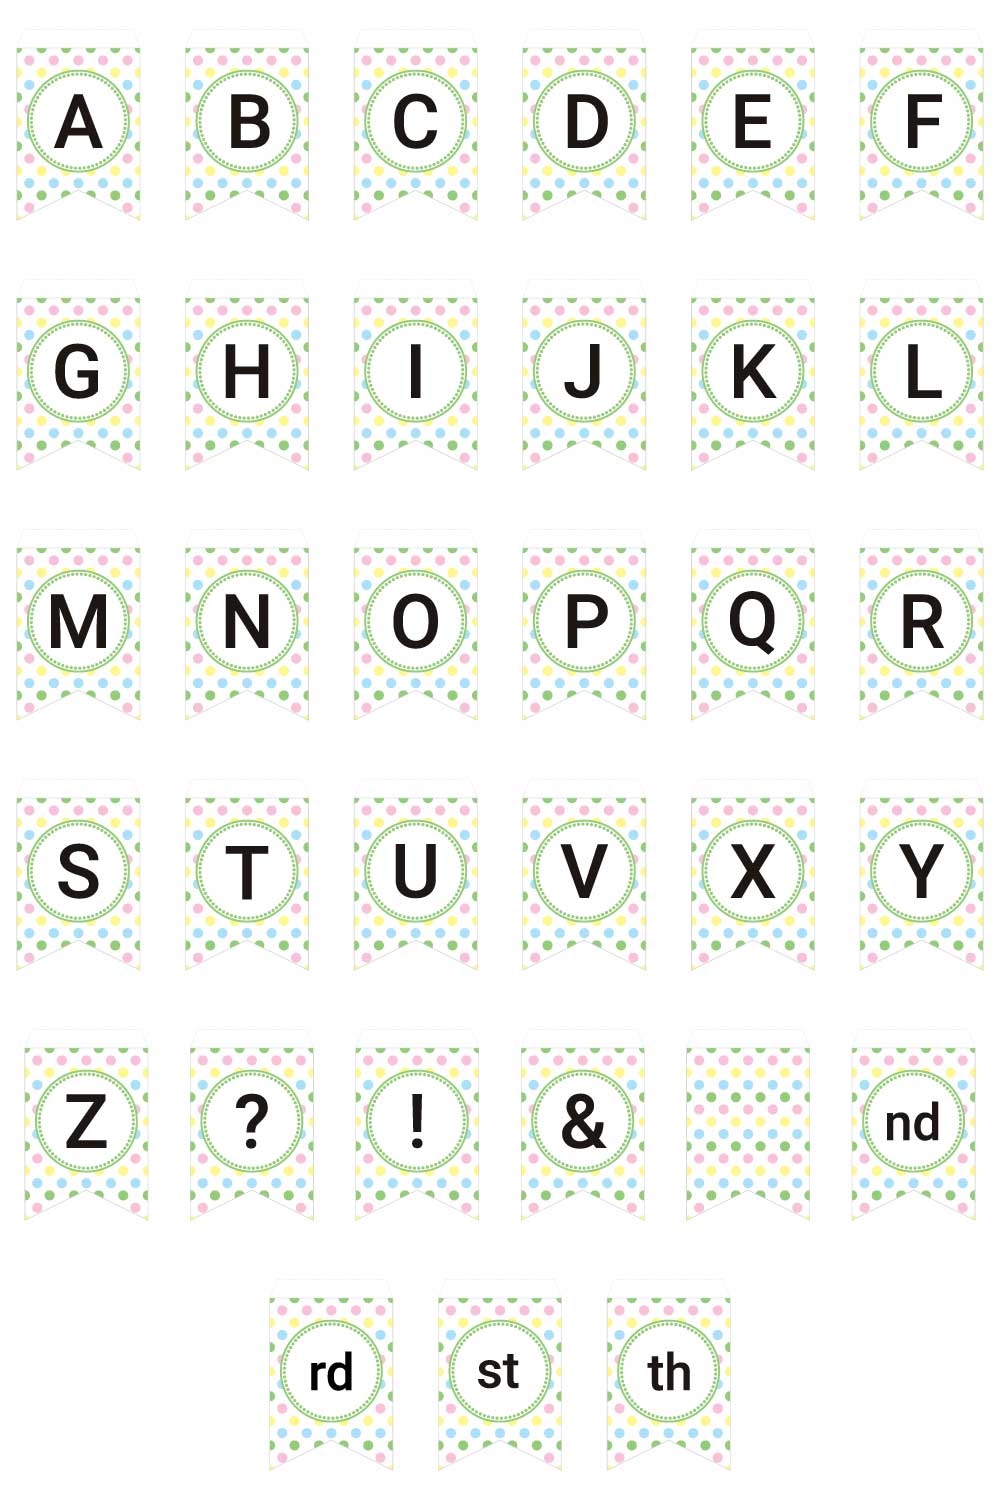 Polka dot printable banner letters